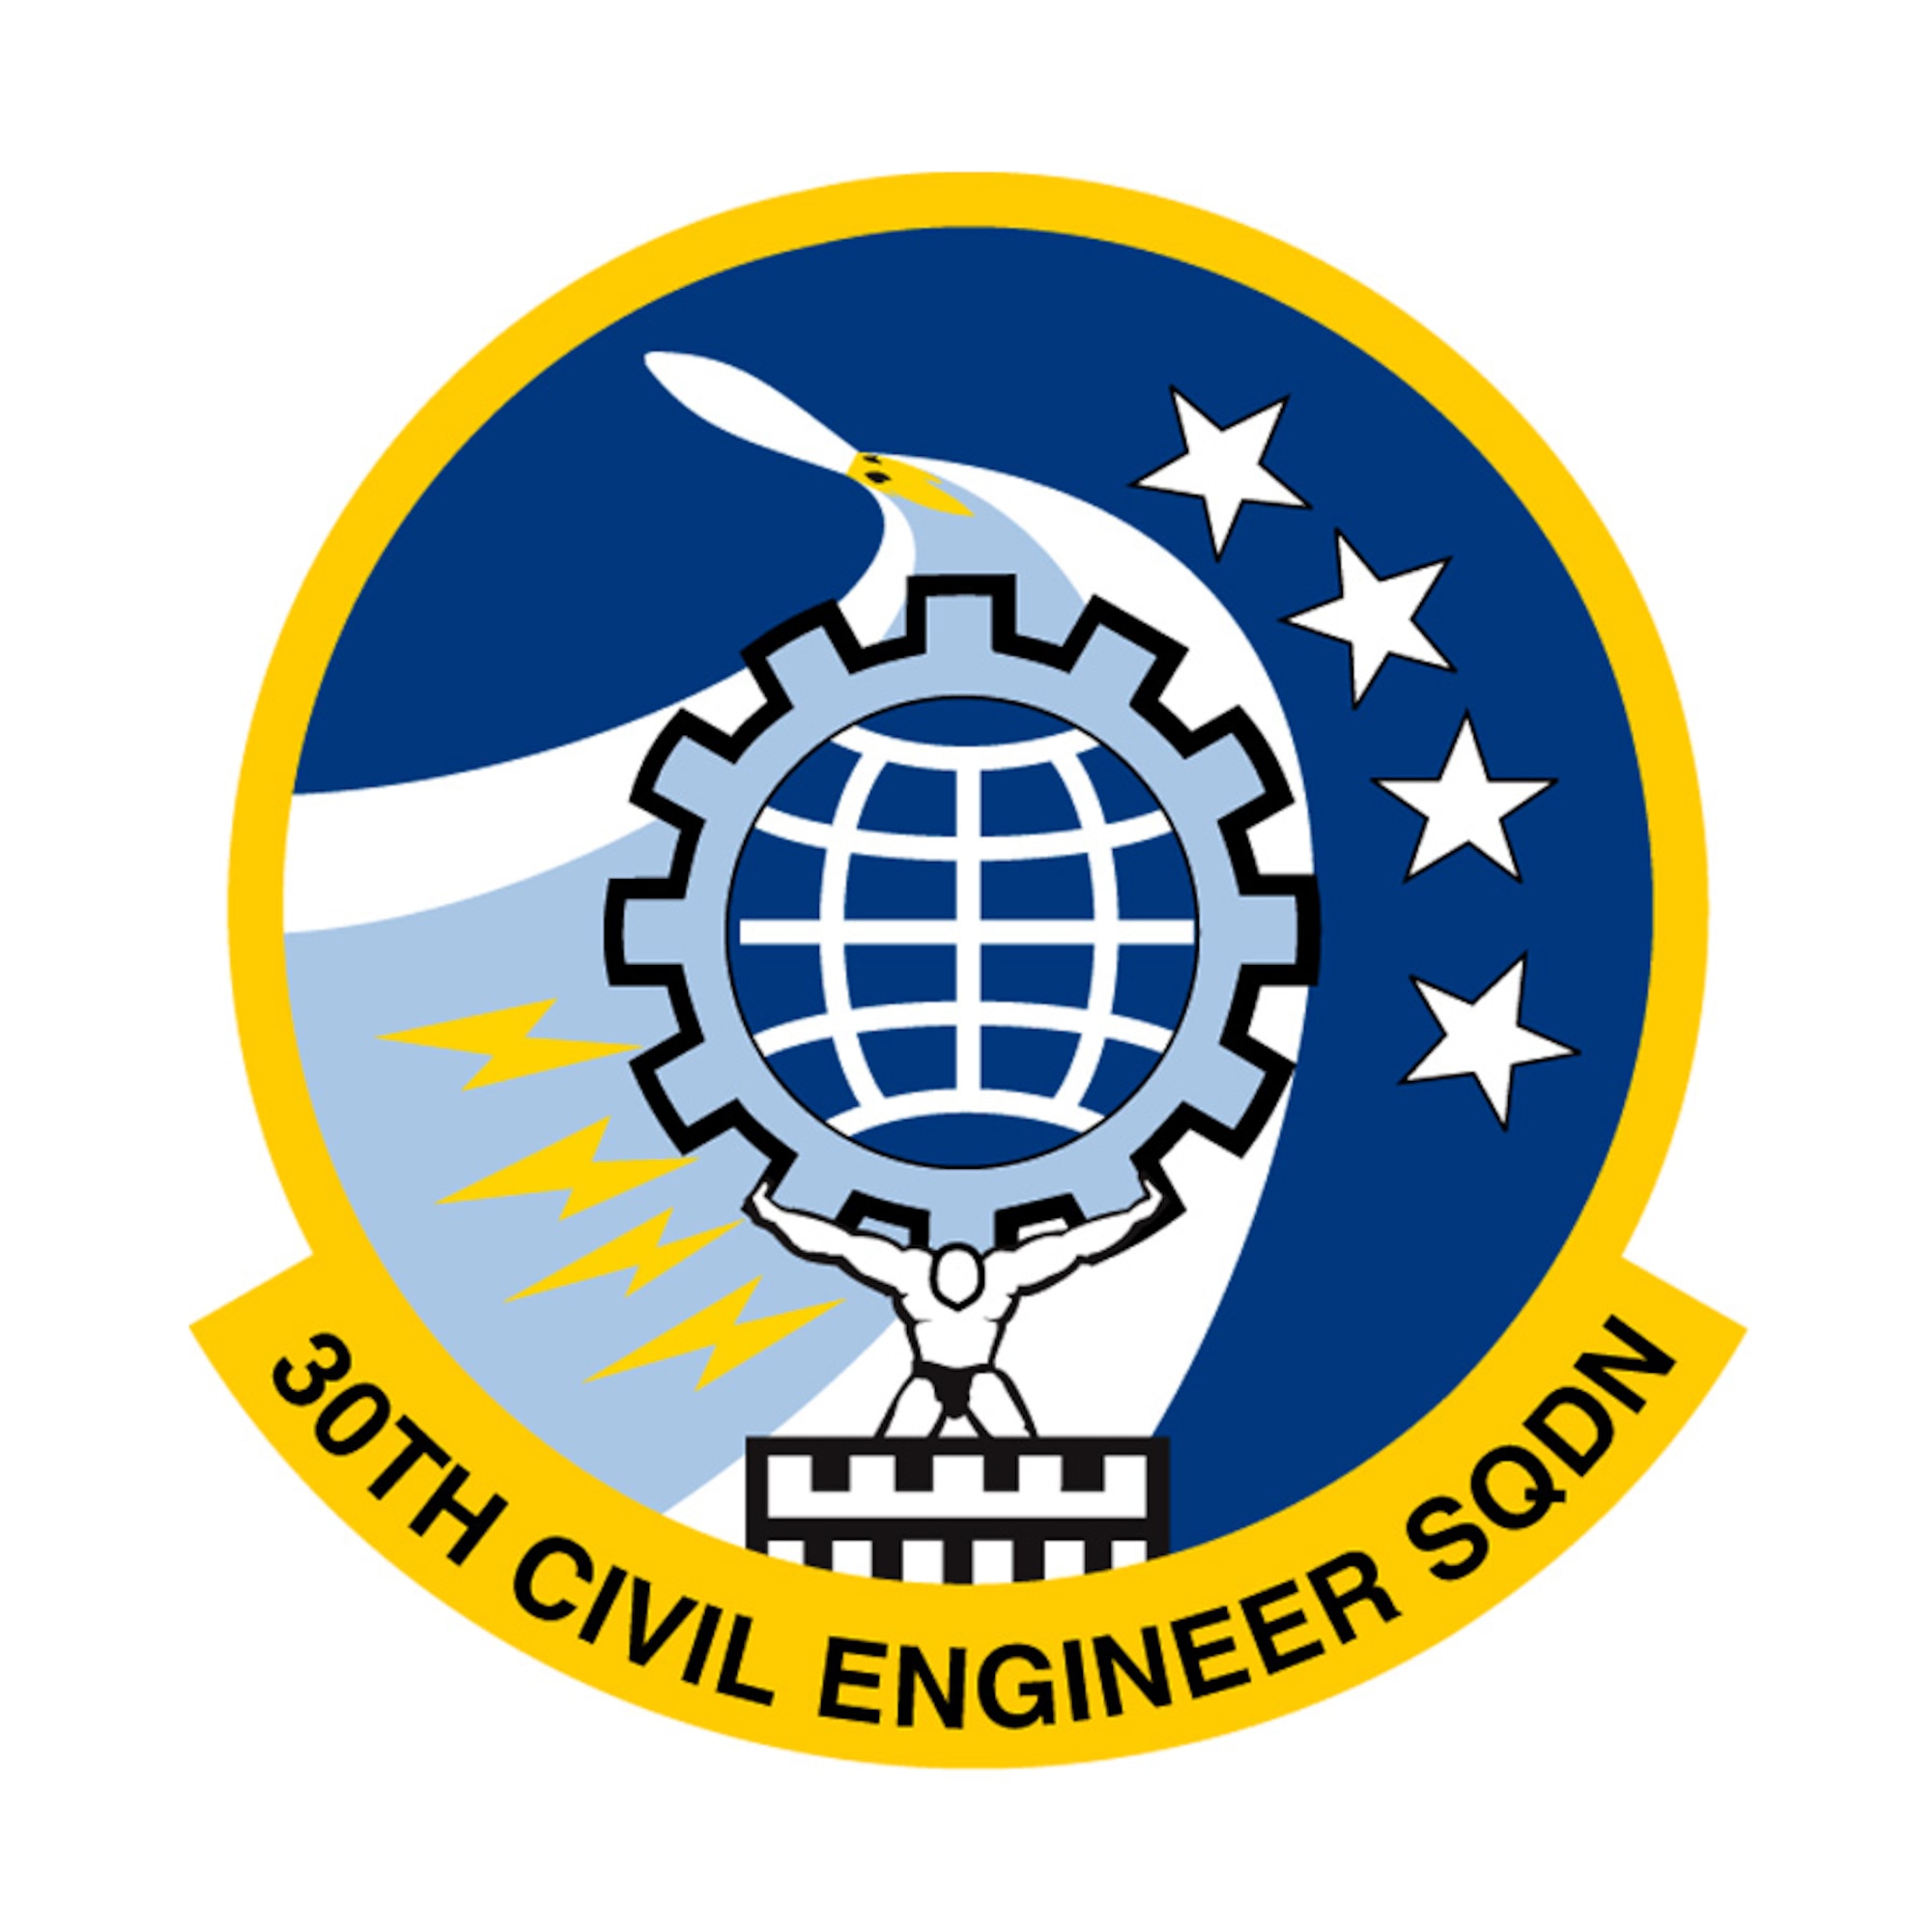 30th Civil Engineer Squadron emblem